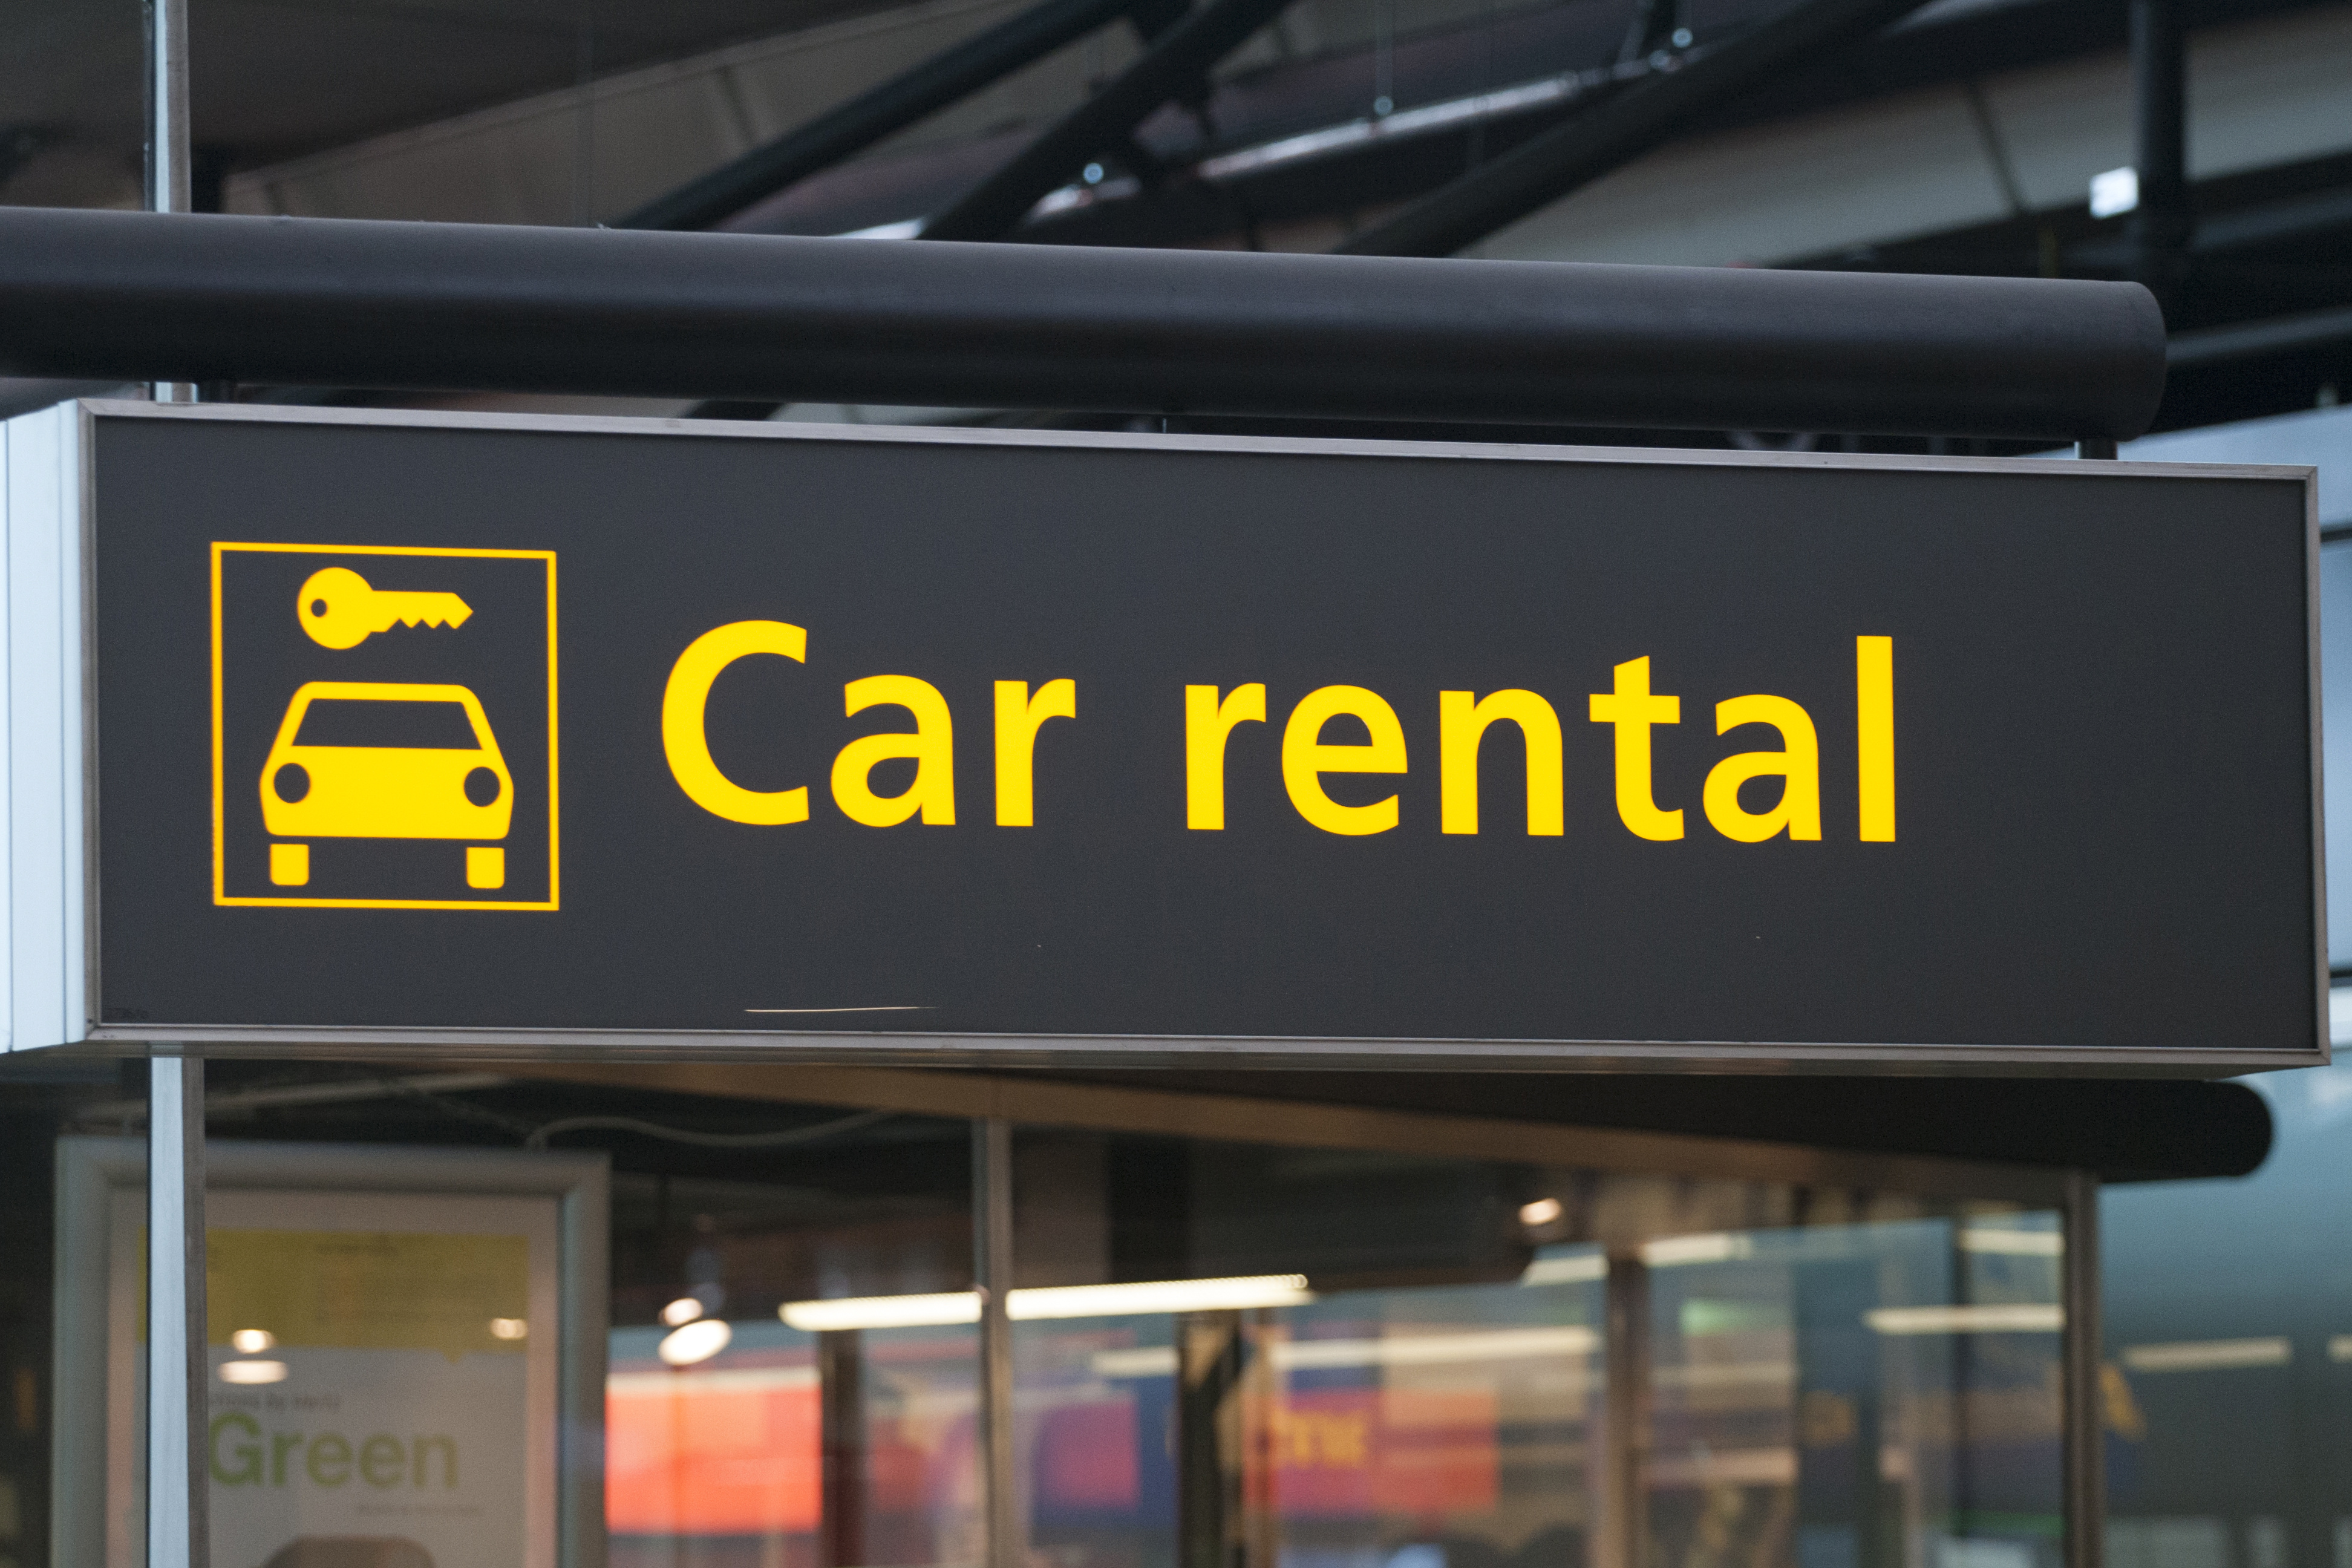 Car rental sign at a airport